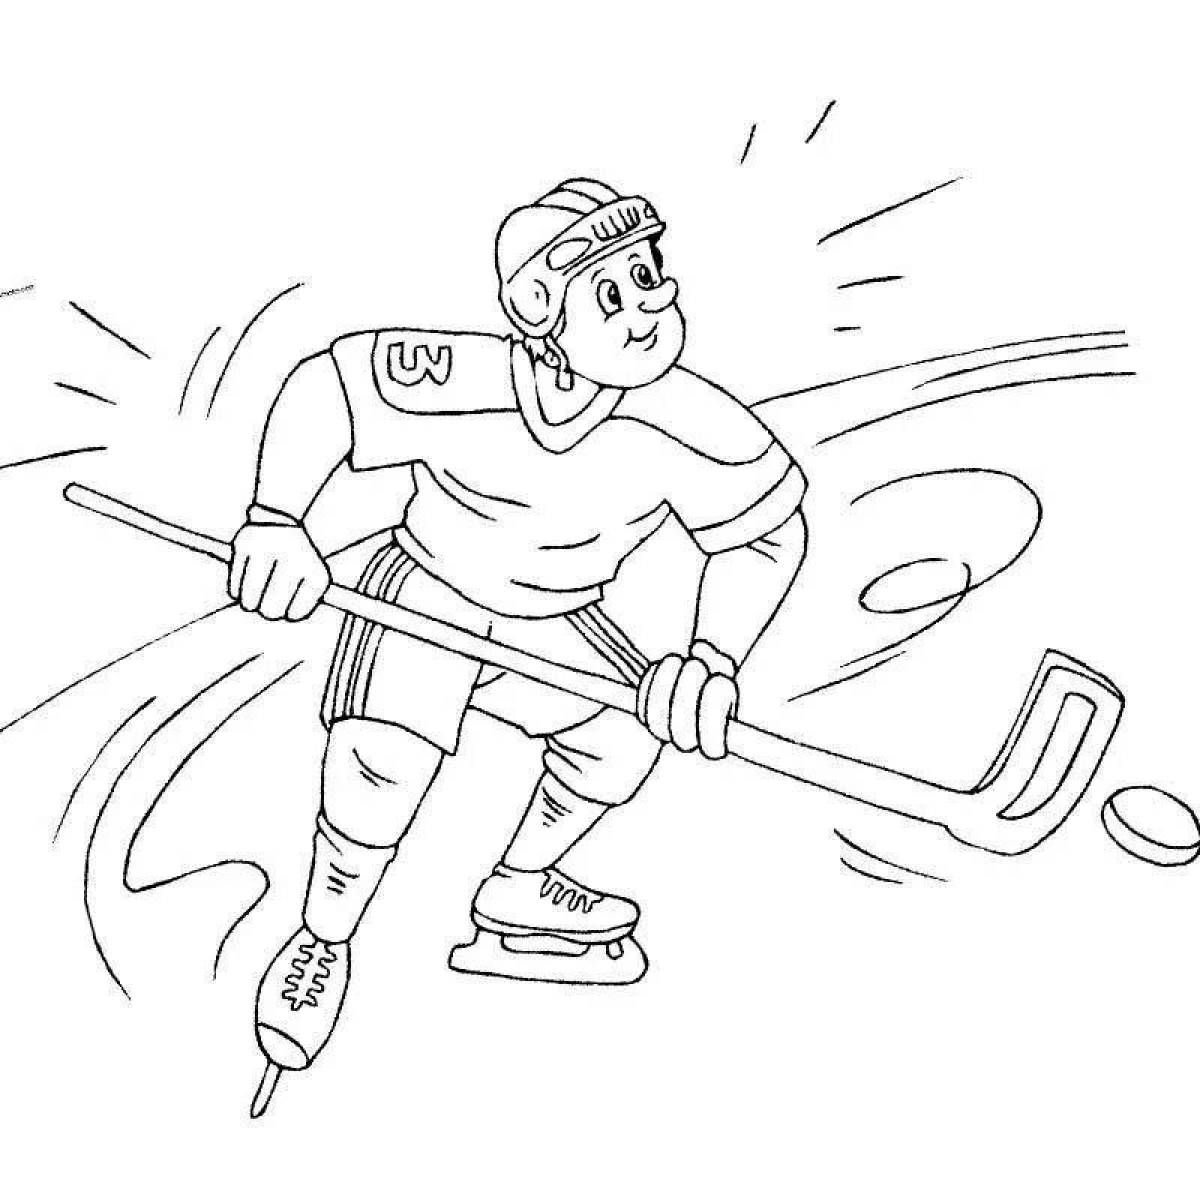 Joyful winter sports coloring page